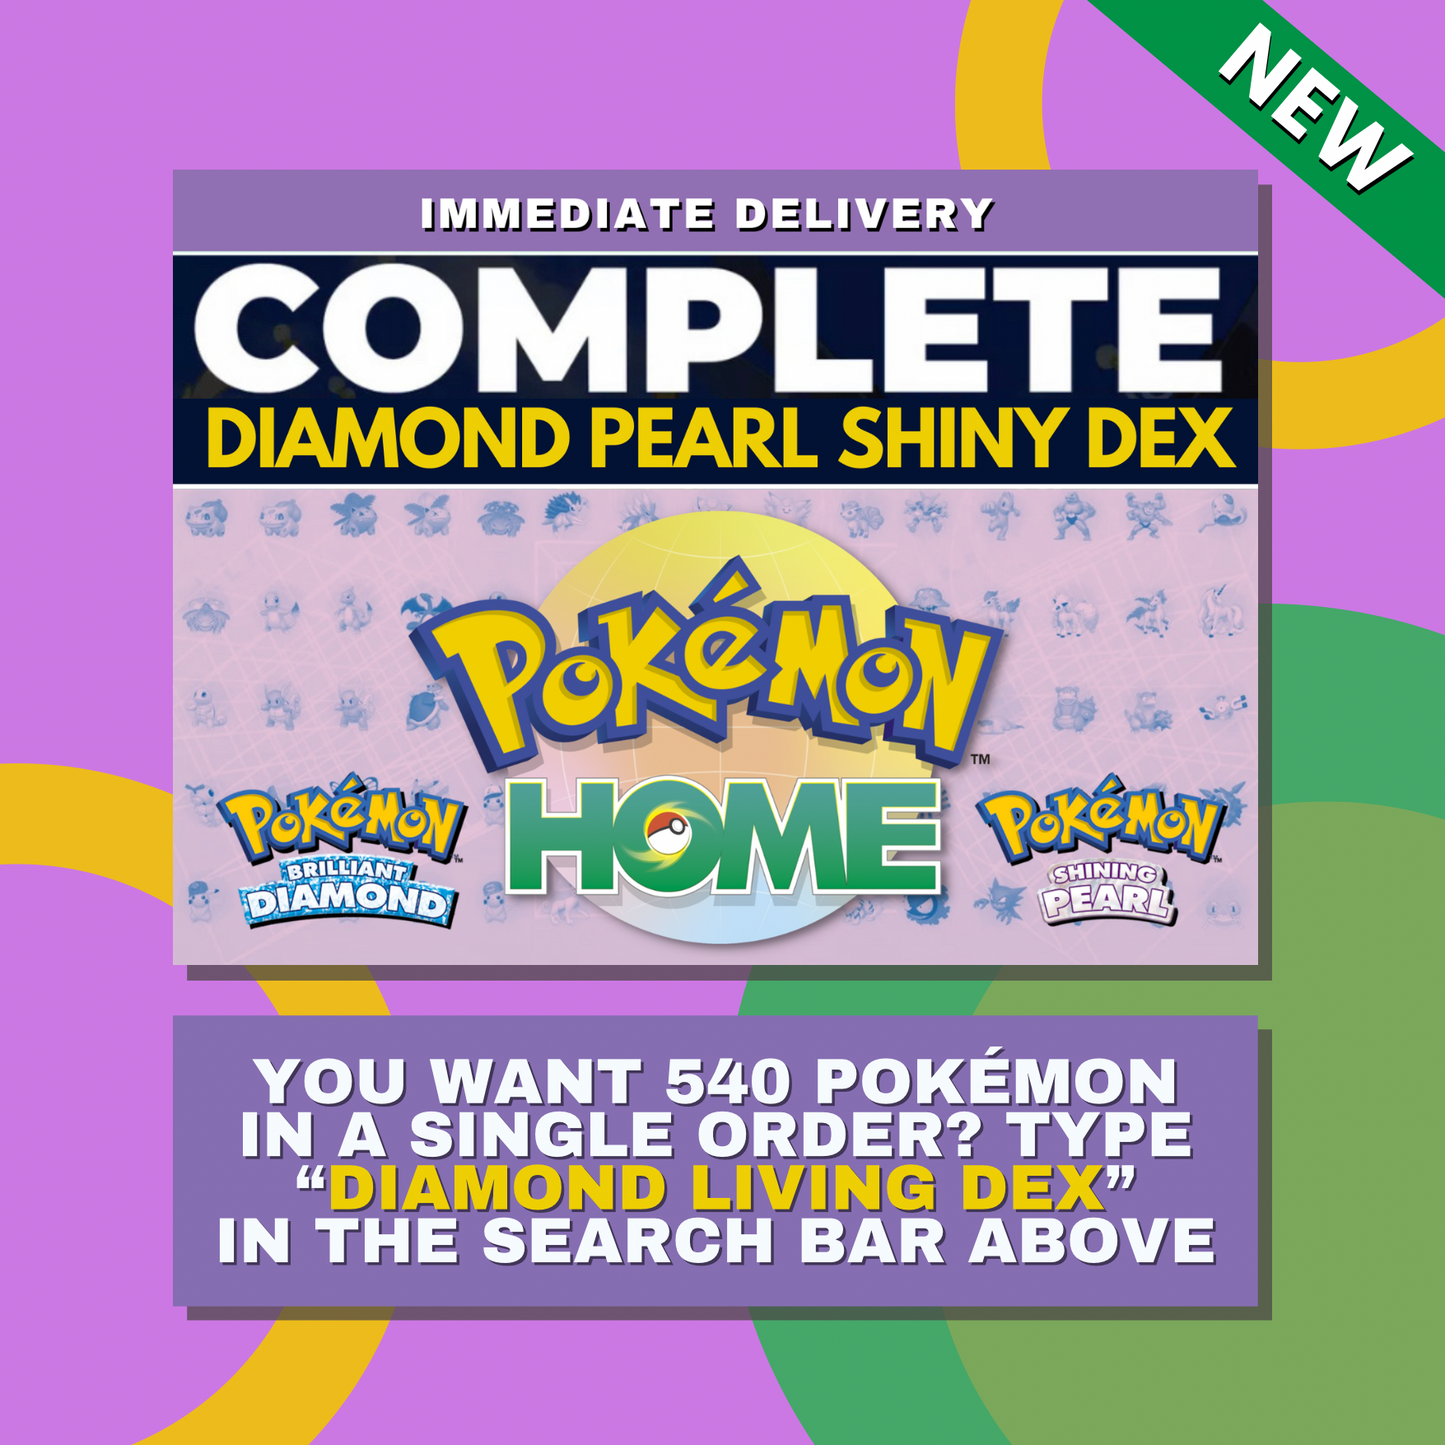 Slowpoke Shiny ✨ or Non Shiny Pokémon Brilliant Diamond Shining Pearl Battle Ready 6 IV Competitive 100% Legit Level 100 Customizable Custom OT by Shiny Living Dex | Shiny Living Dex